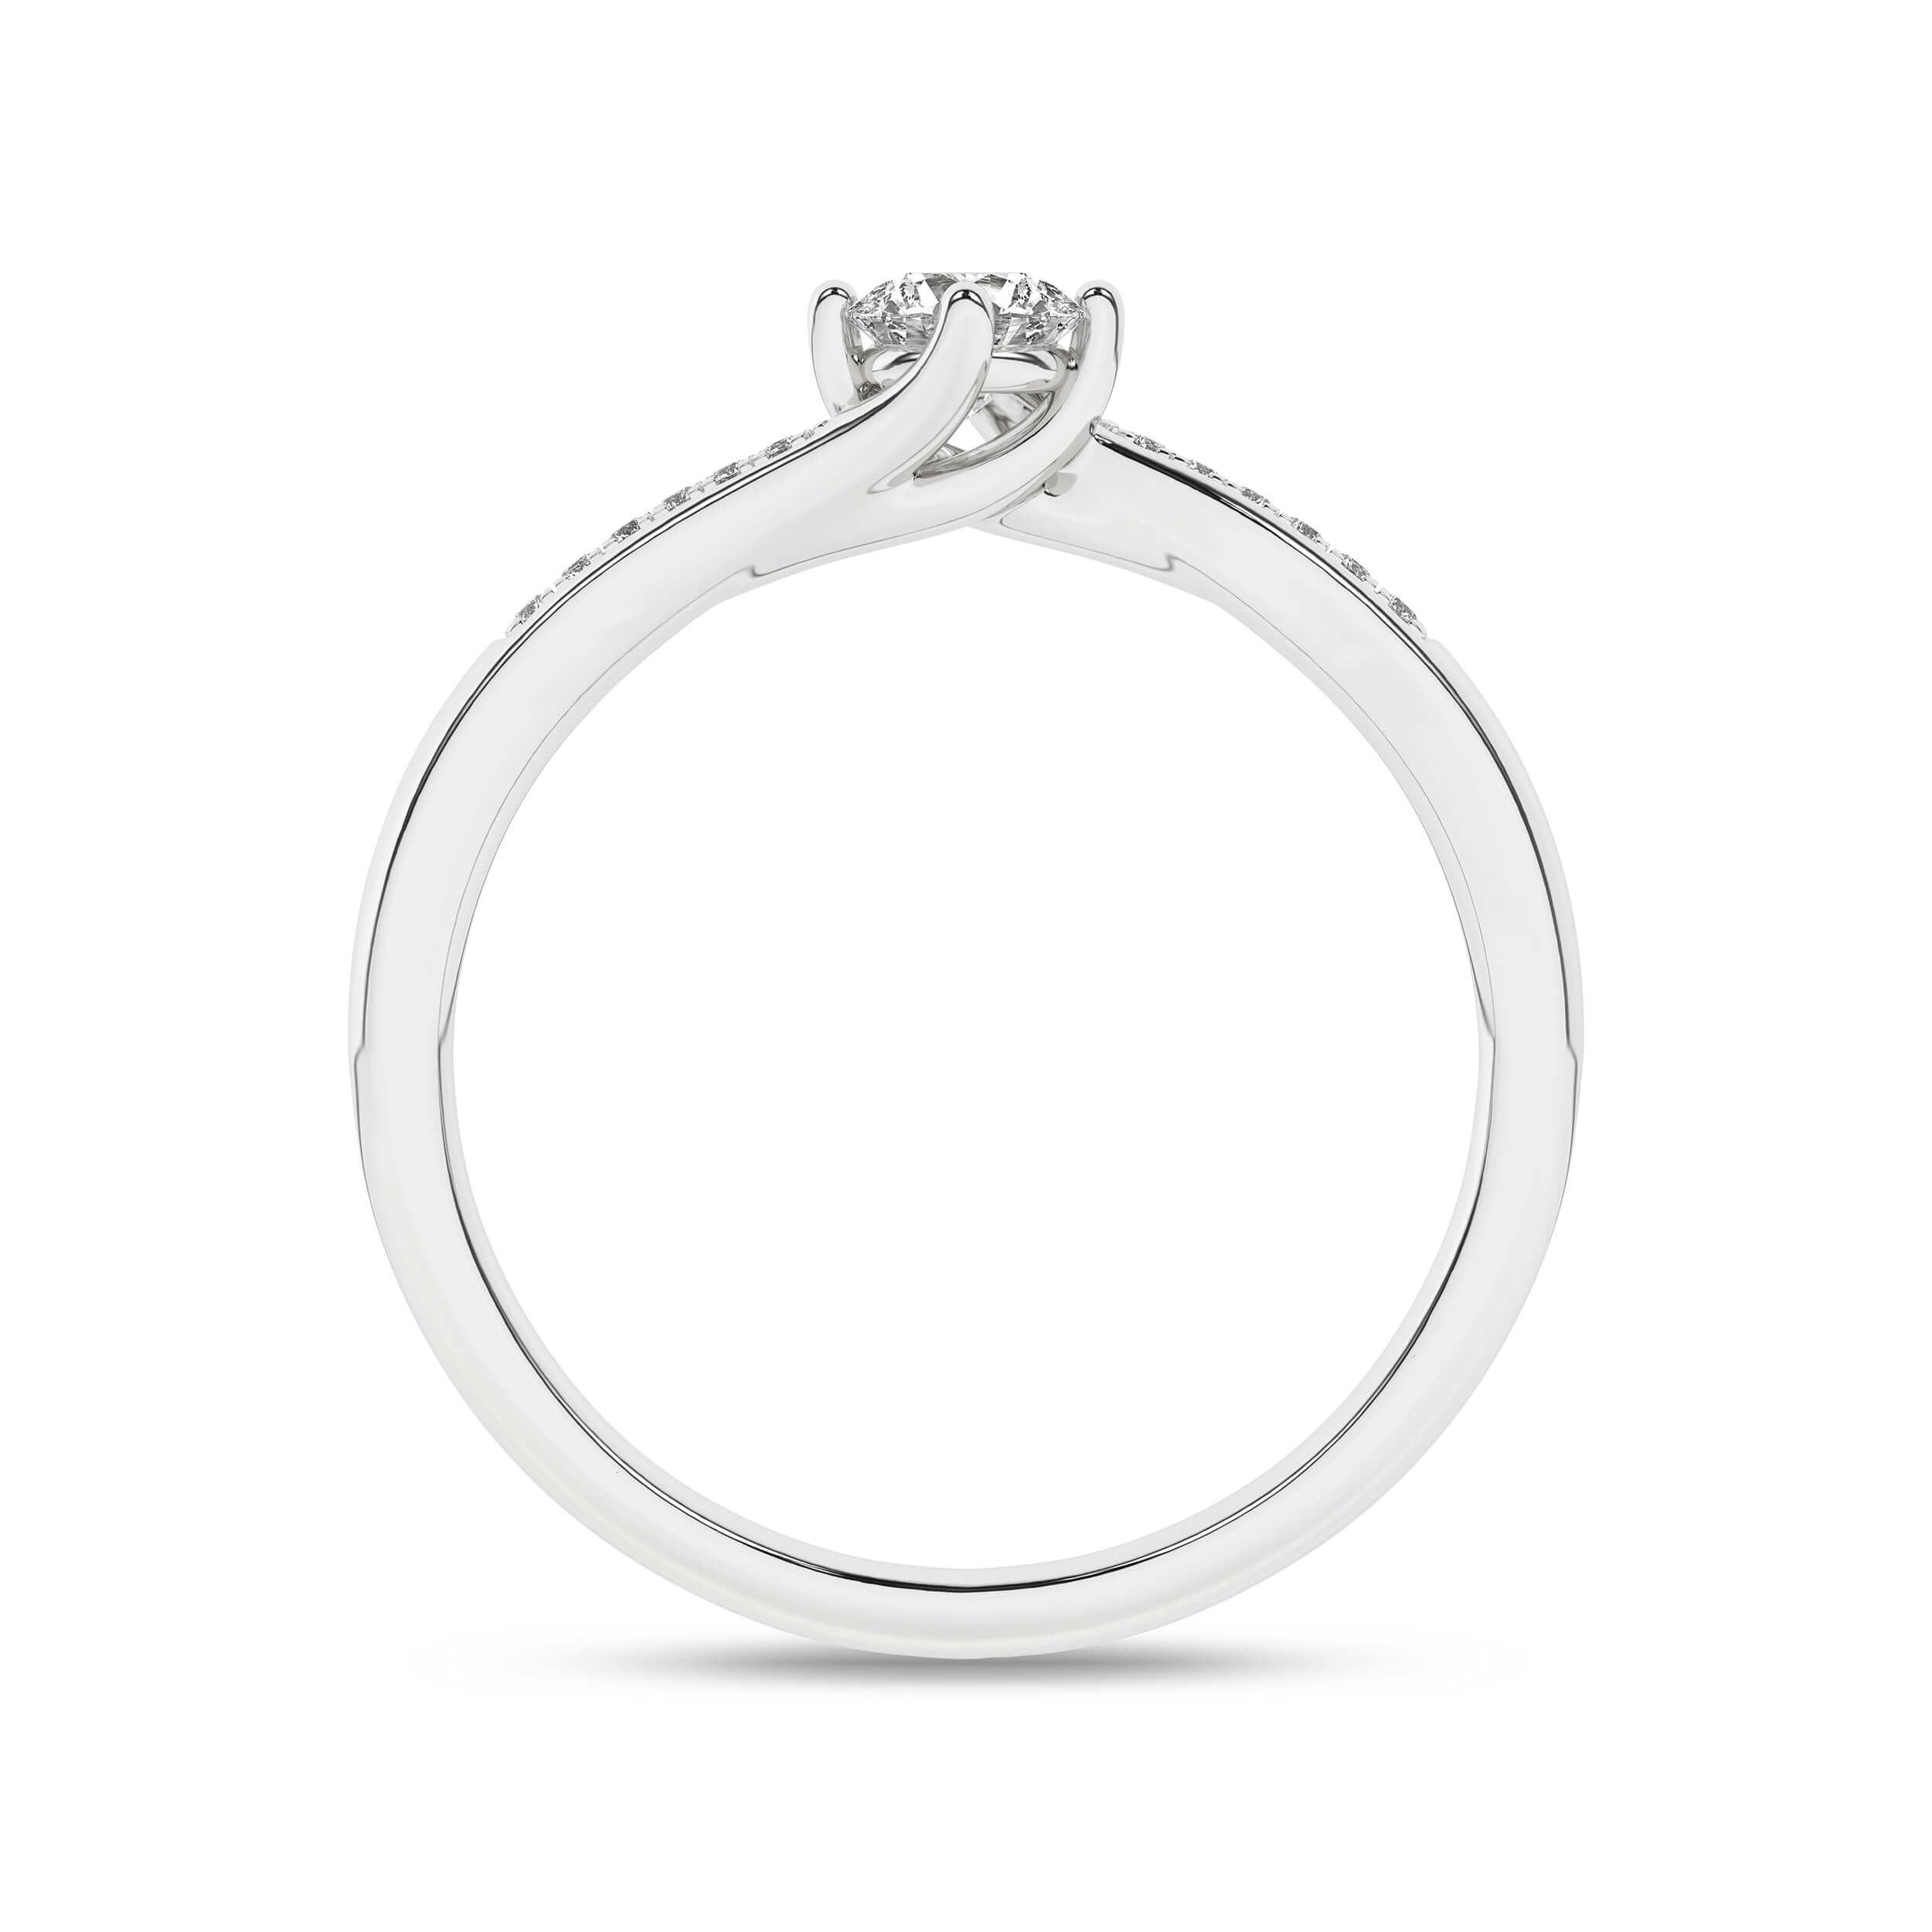 Inel de logodna din Aur Alb 14K cu Diamante 0.23Ct, articol MSD0344EG, previzualizare foto 3